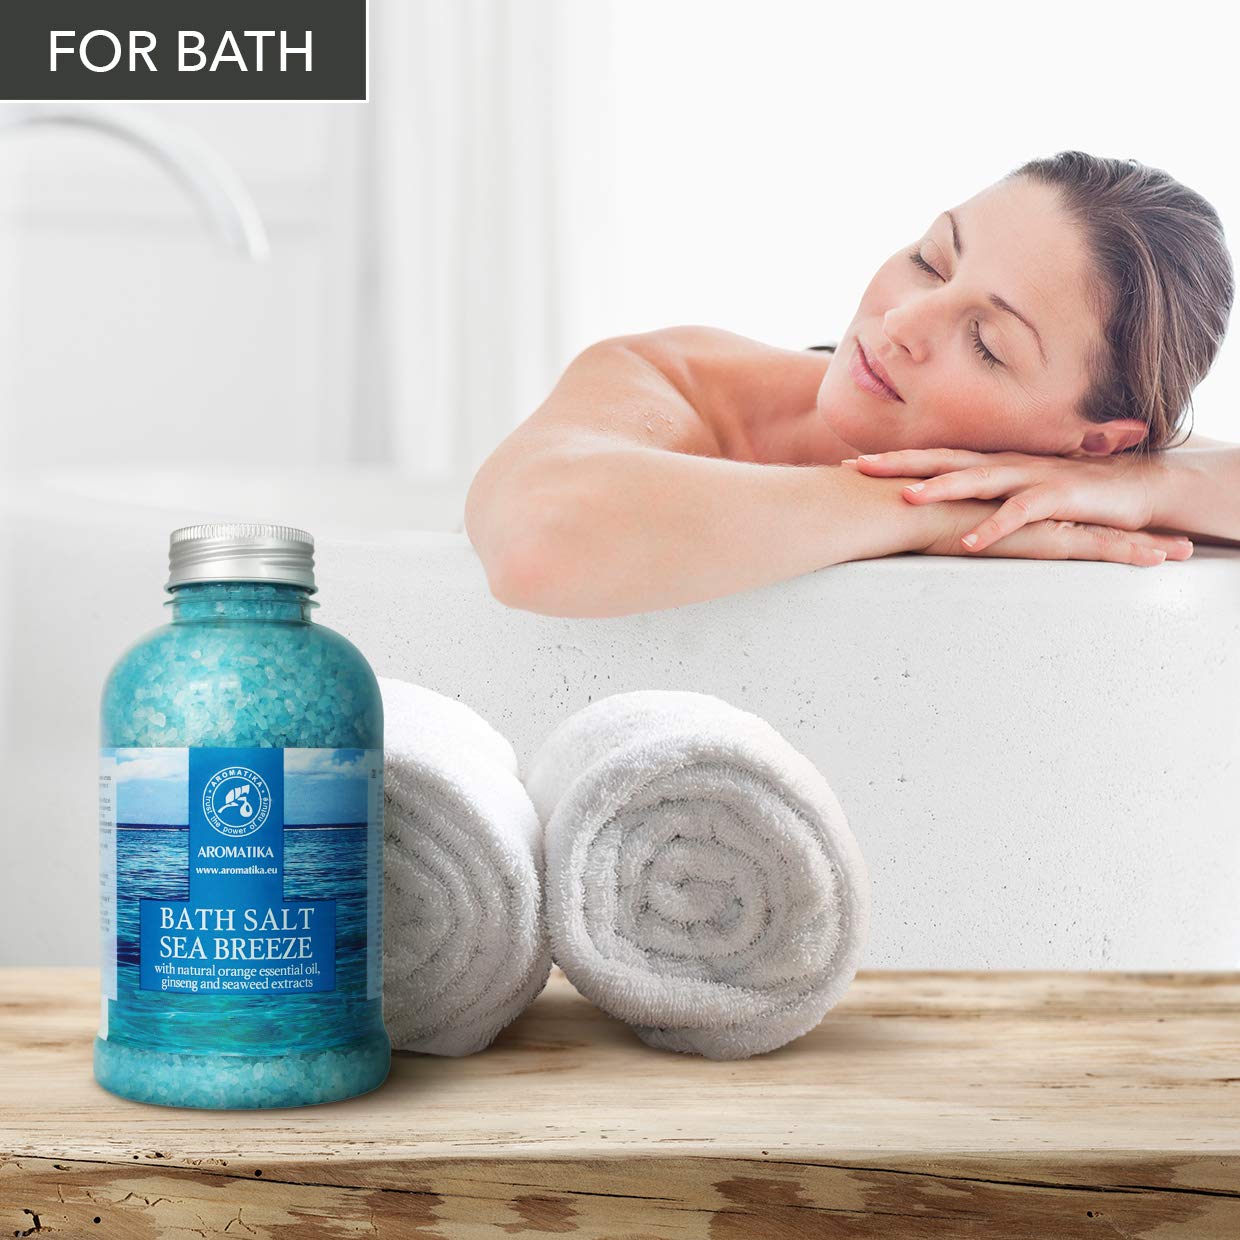 Bath Sea Salt 46 Oz - Sea Breeze Salt - Natural Bath Sea Salts - Best for Good Sleep - Relaxing - Calming - Body Care - Beauty - Aromatherapy